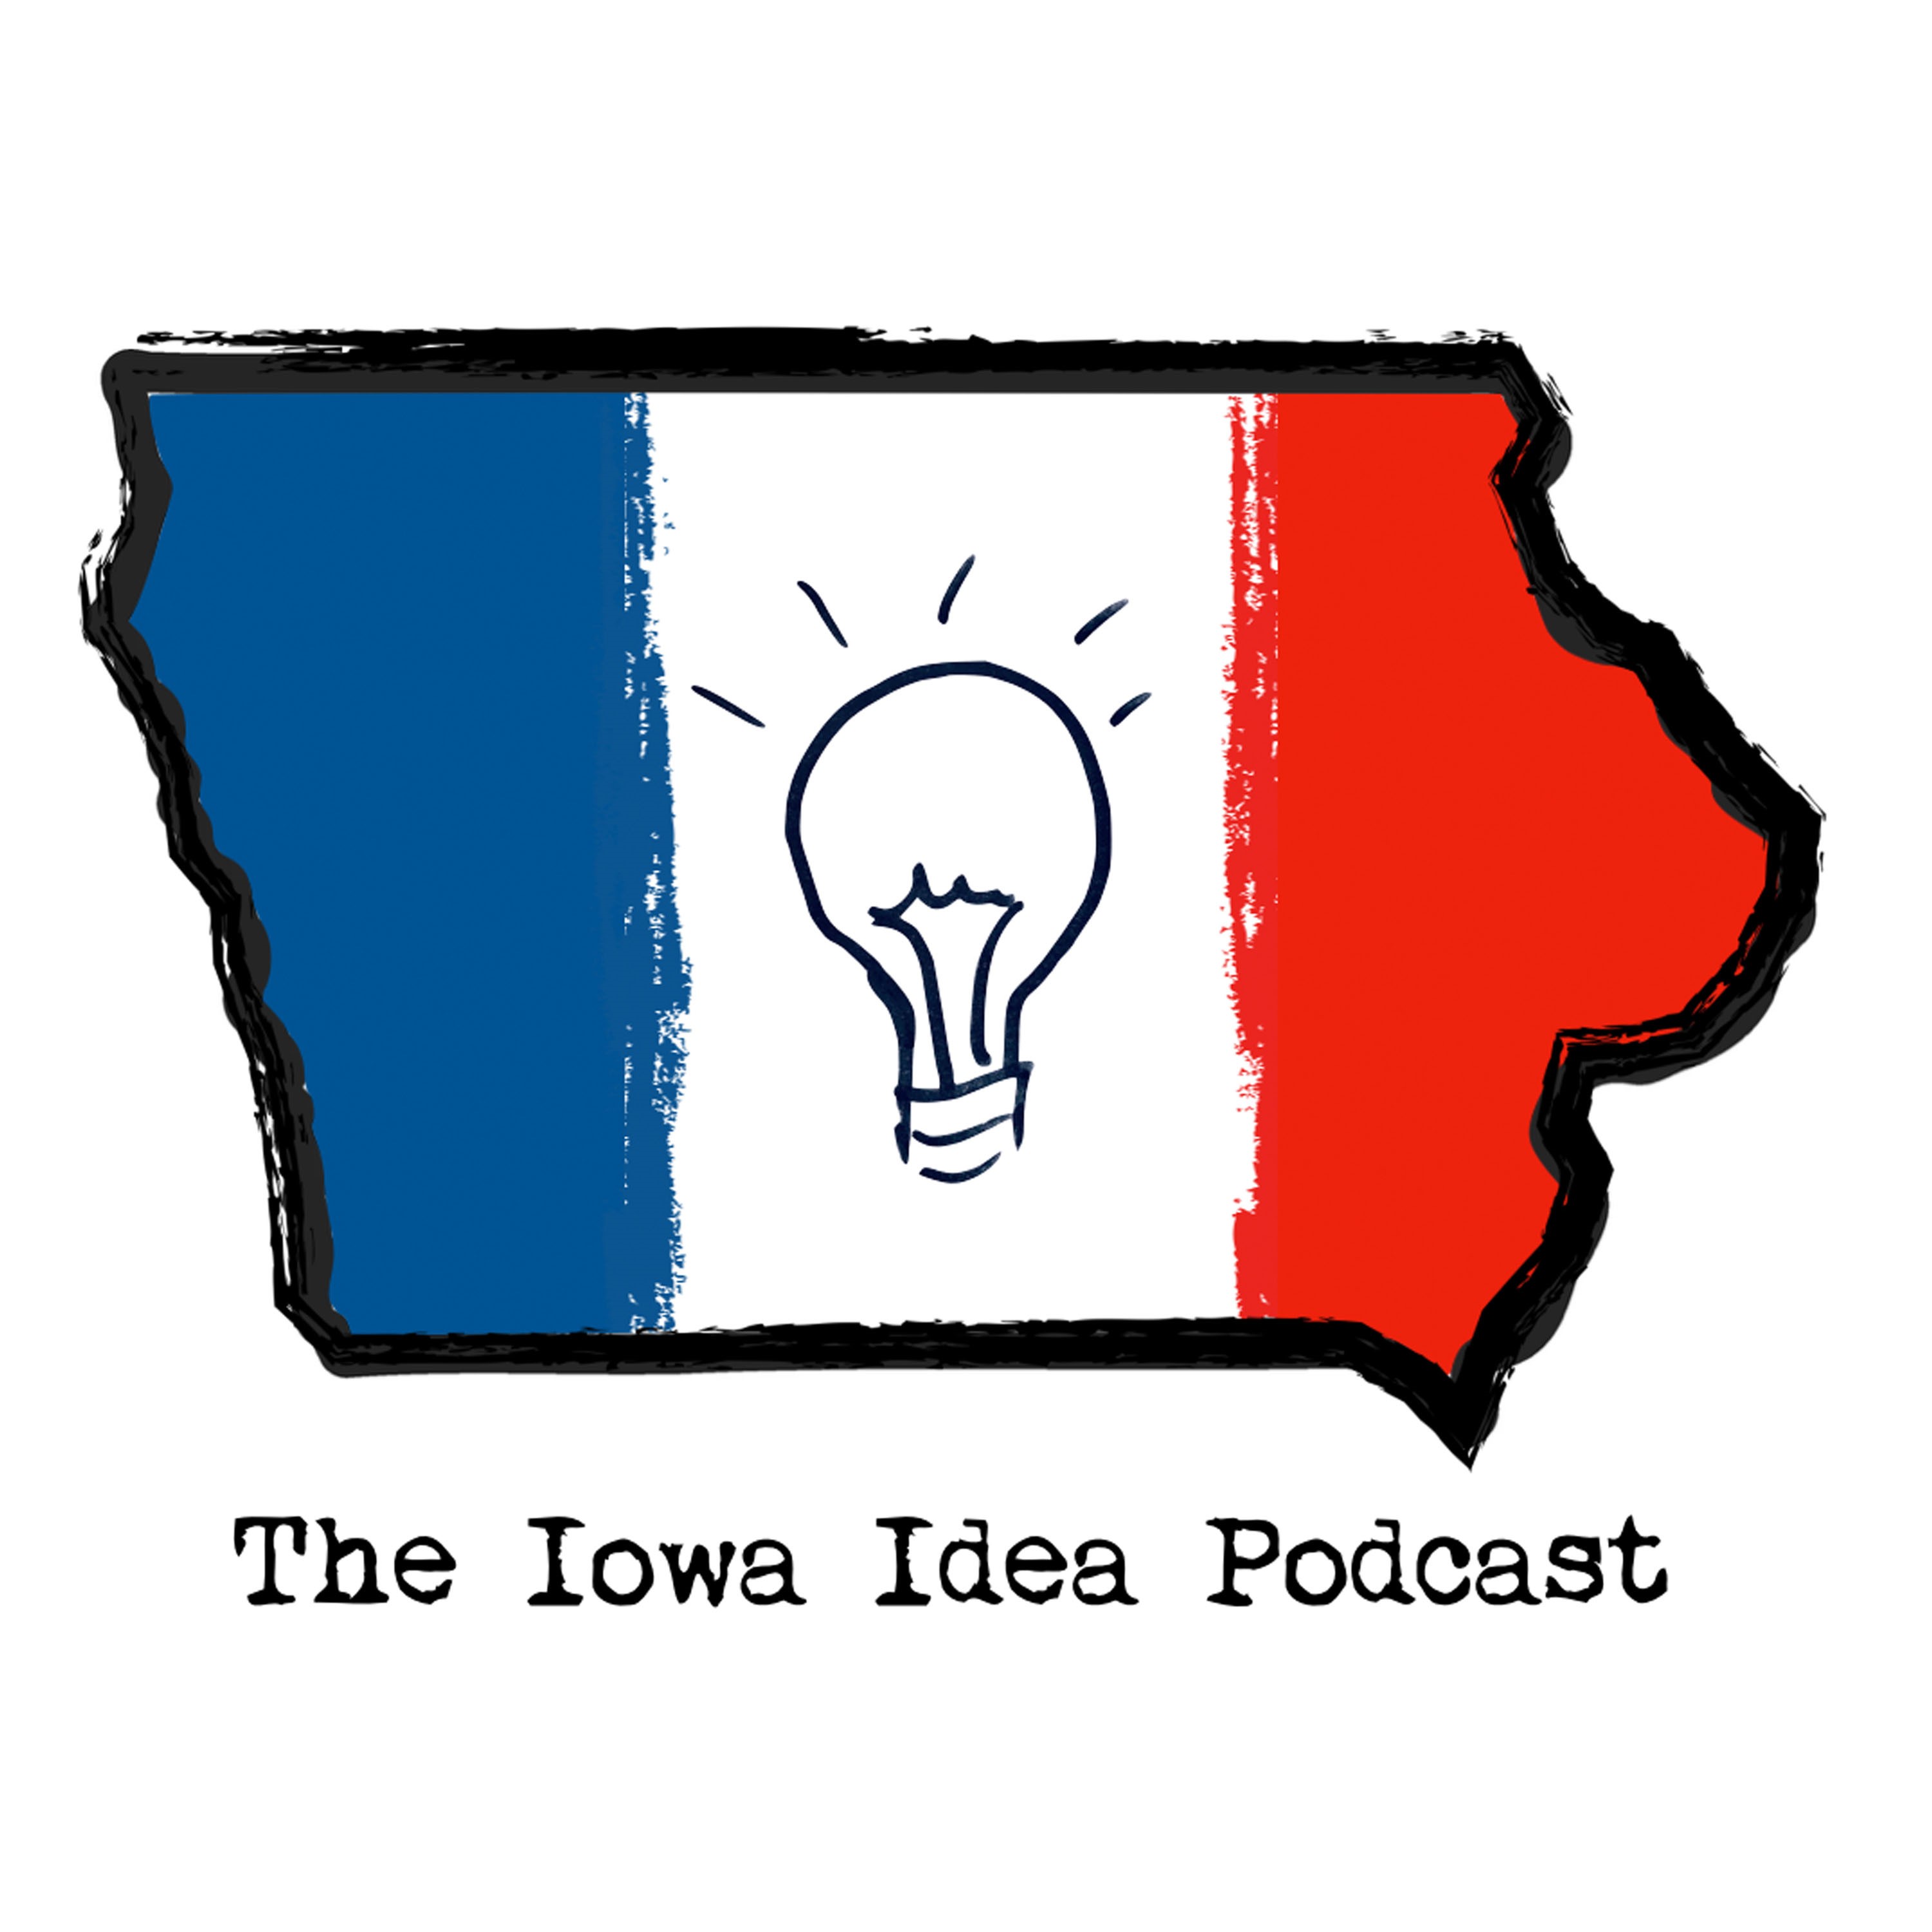 The Iowa Idea Podcast